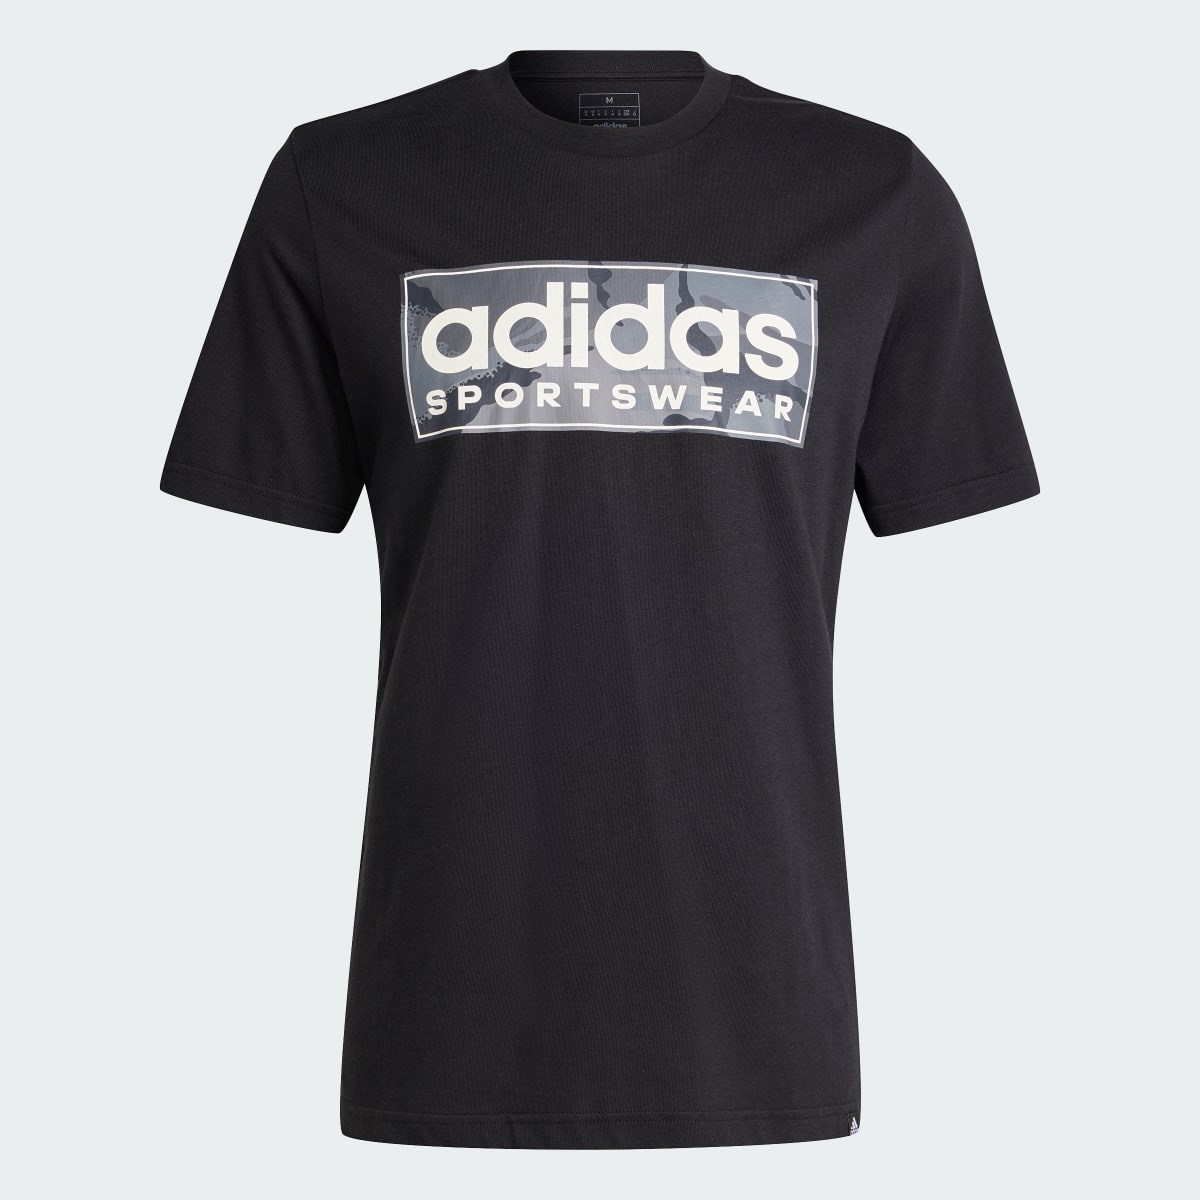 Adidas Camo Linear Graphic T-Shirt. 5